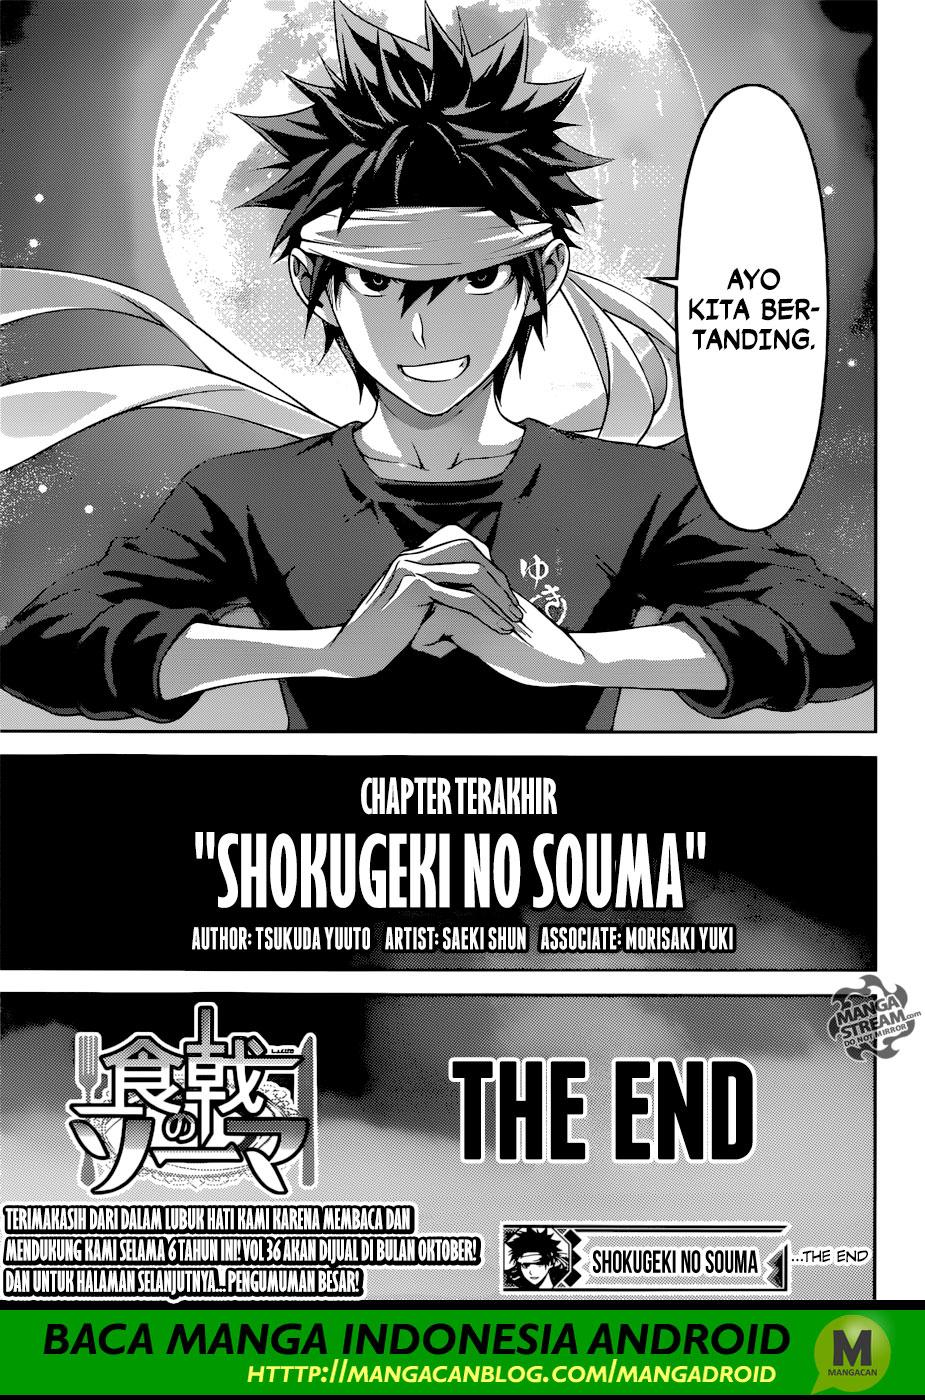 Shokugeki no Soma Chapter 315 – End